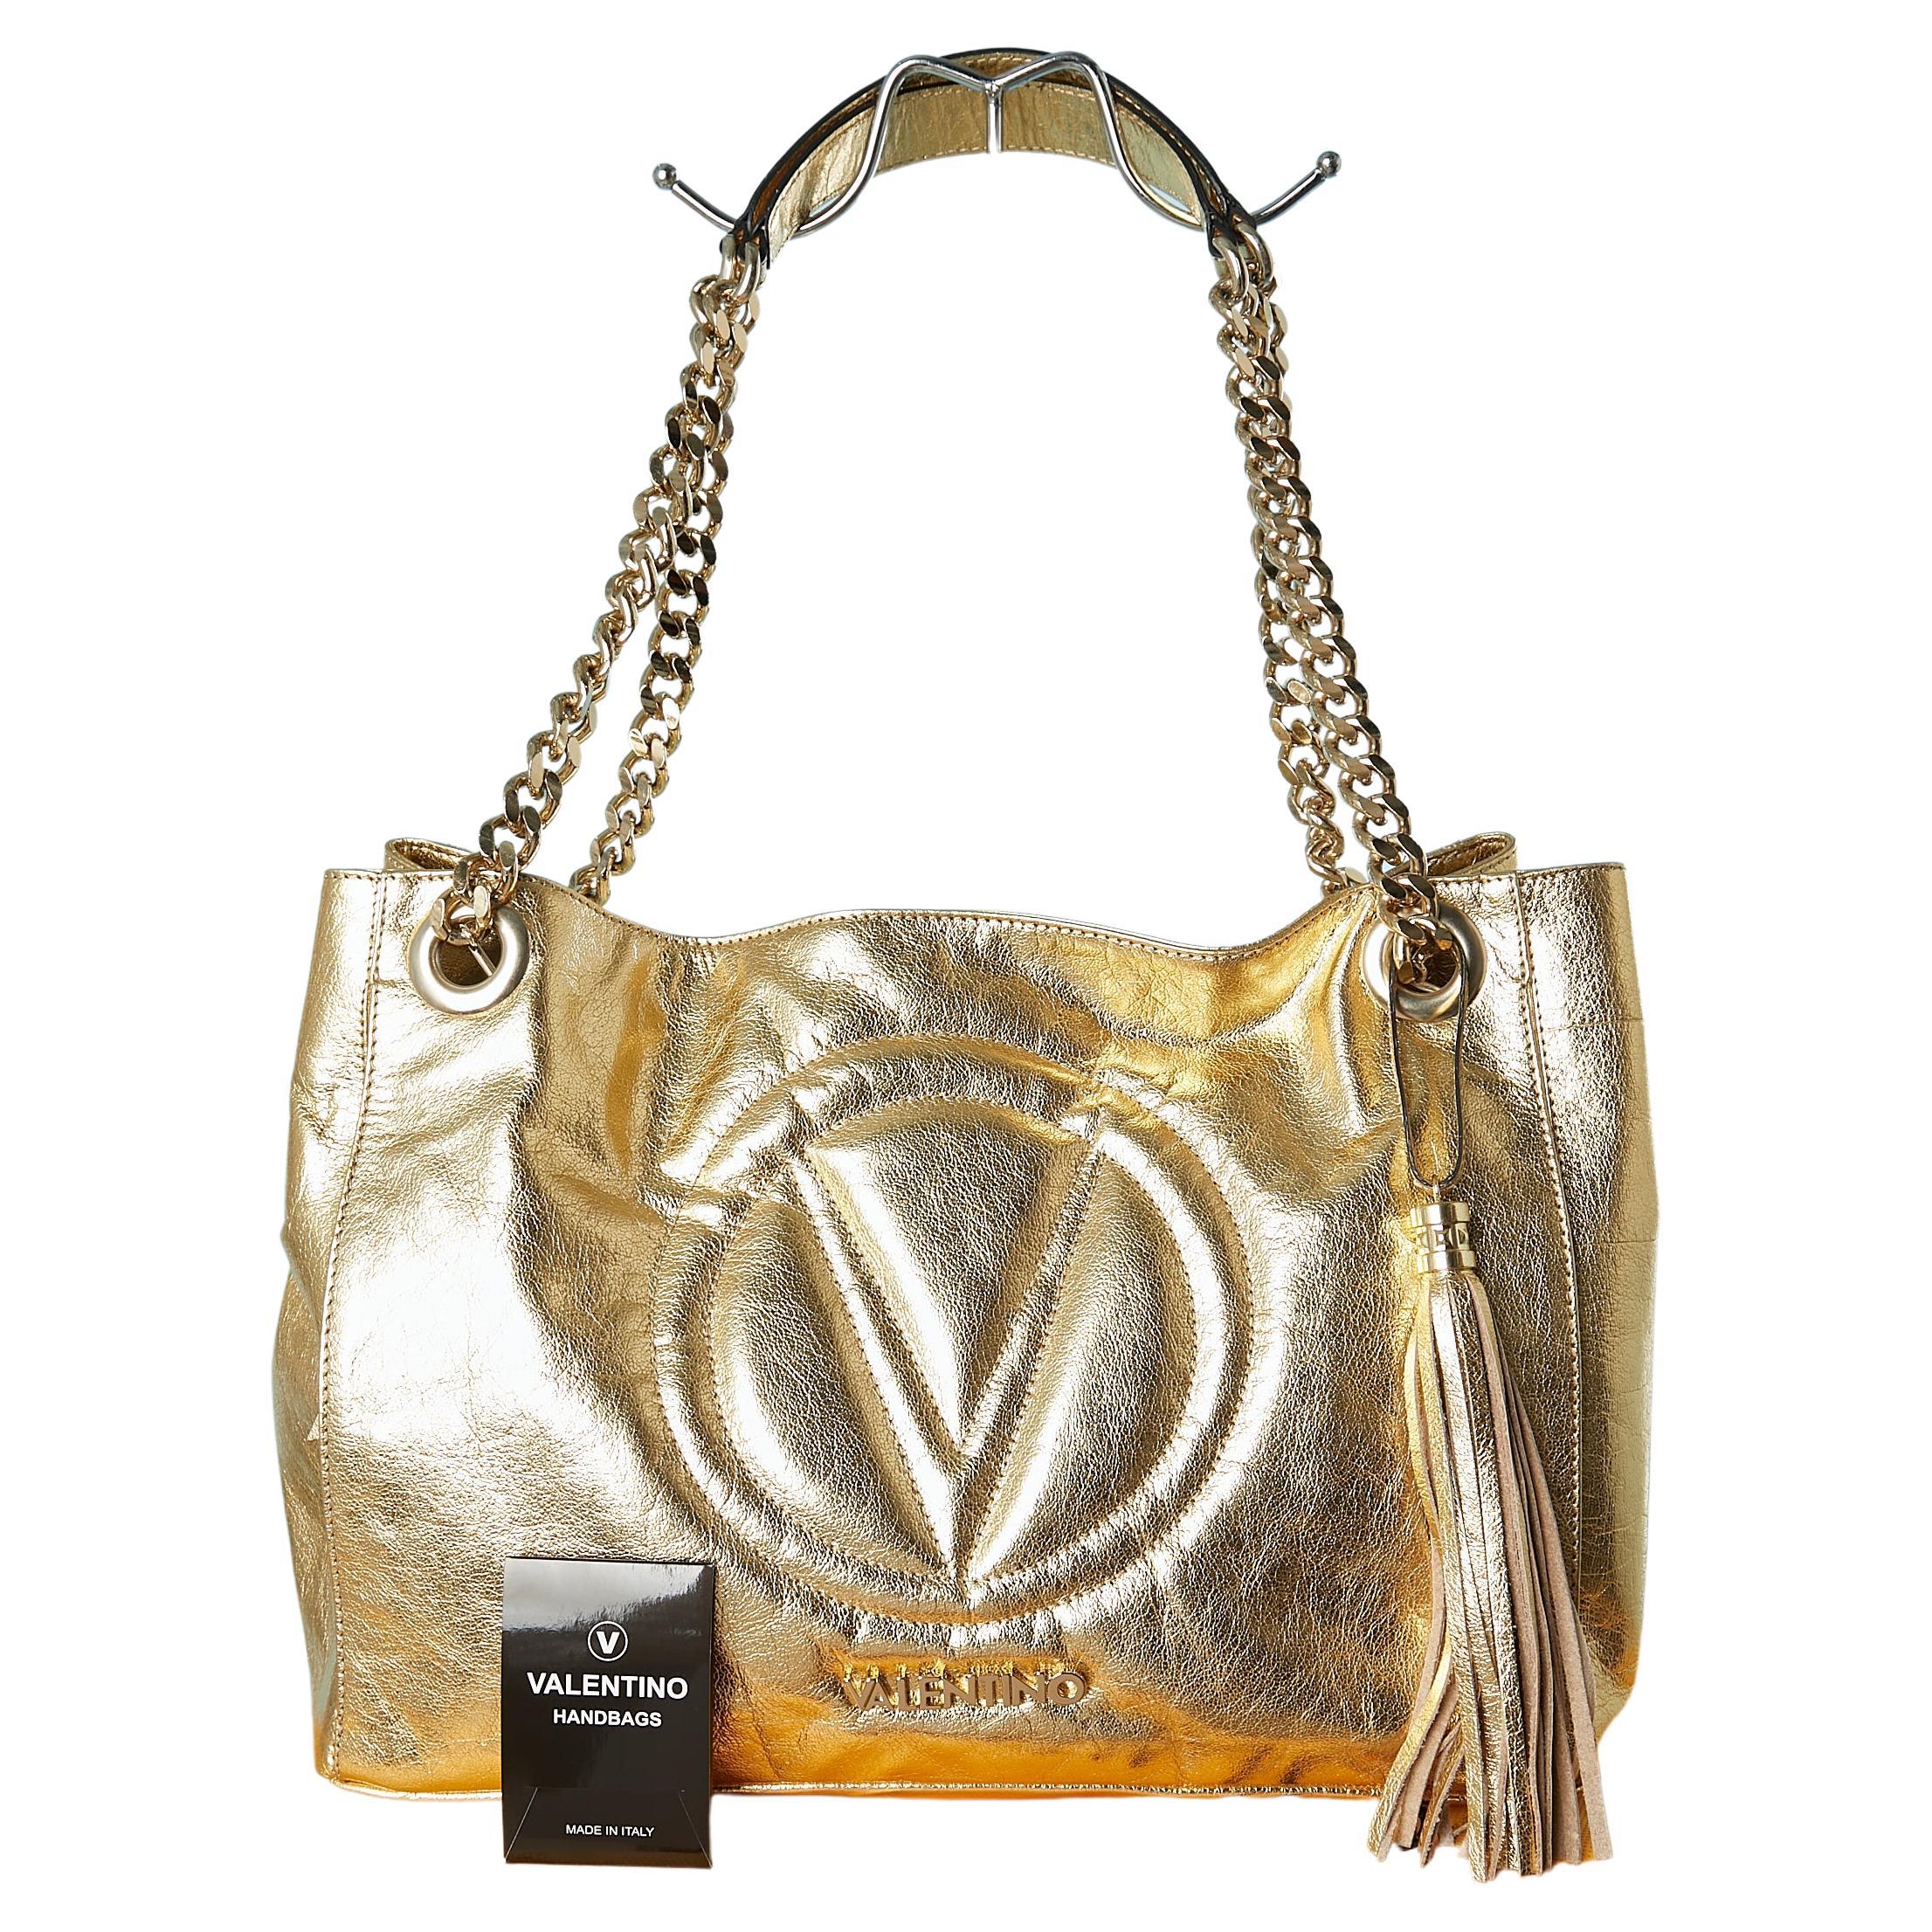 Vintage Mario Valentino Handbags and Purses - 7 For Sale at